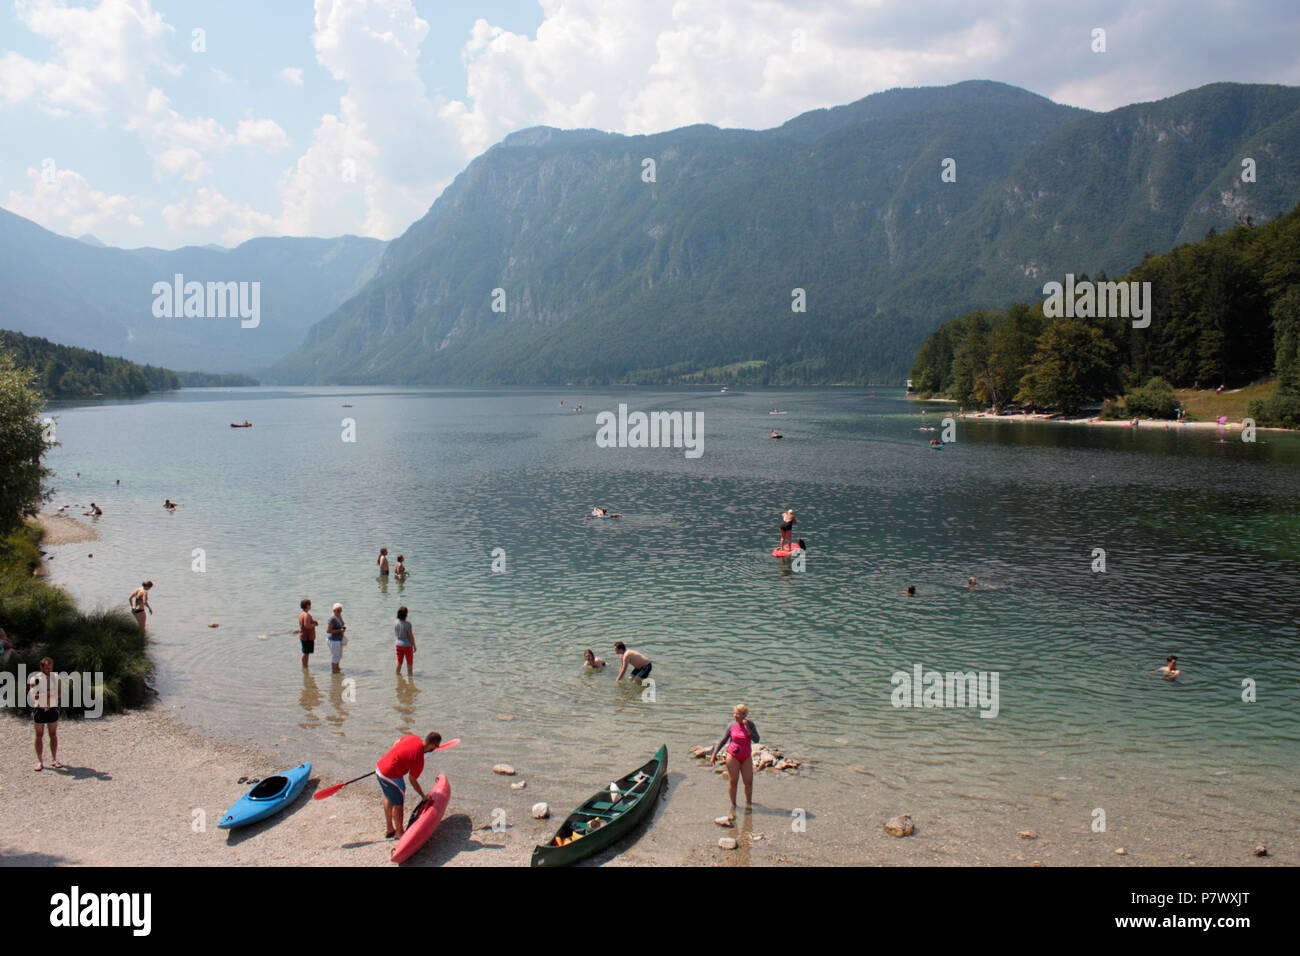 People enjoying the water at Lake Bohinj, Slovenia, Europe, in summer Stock Photo